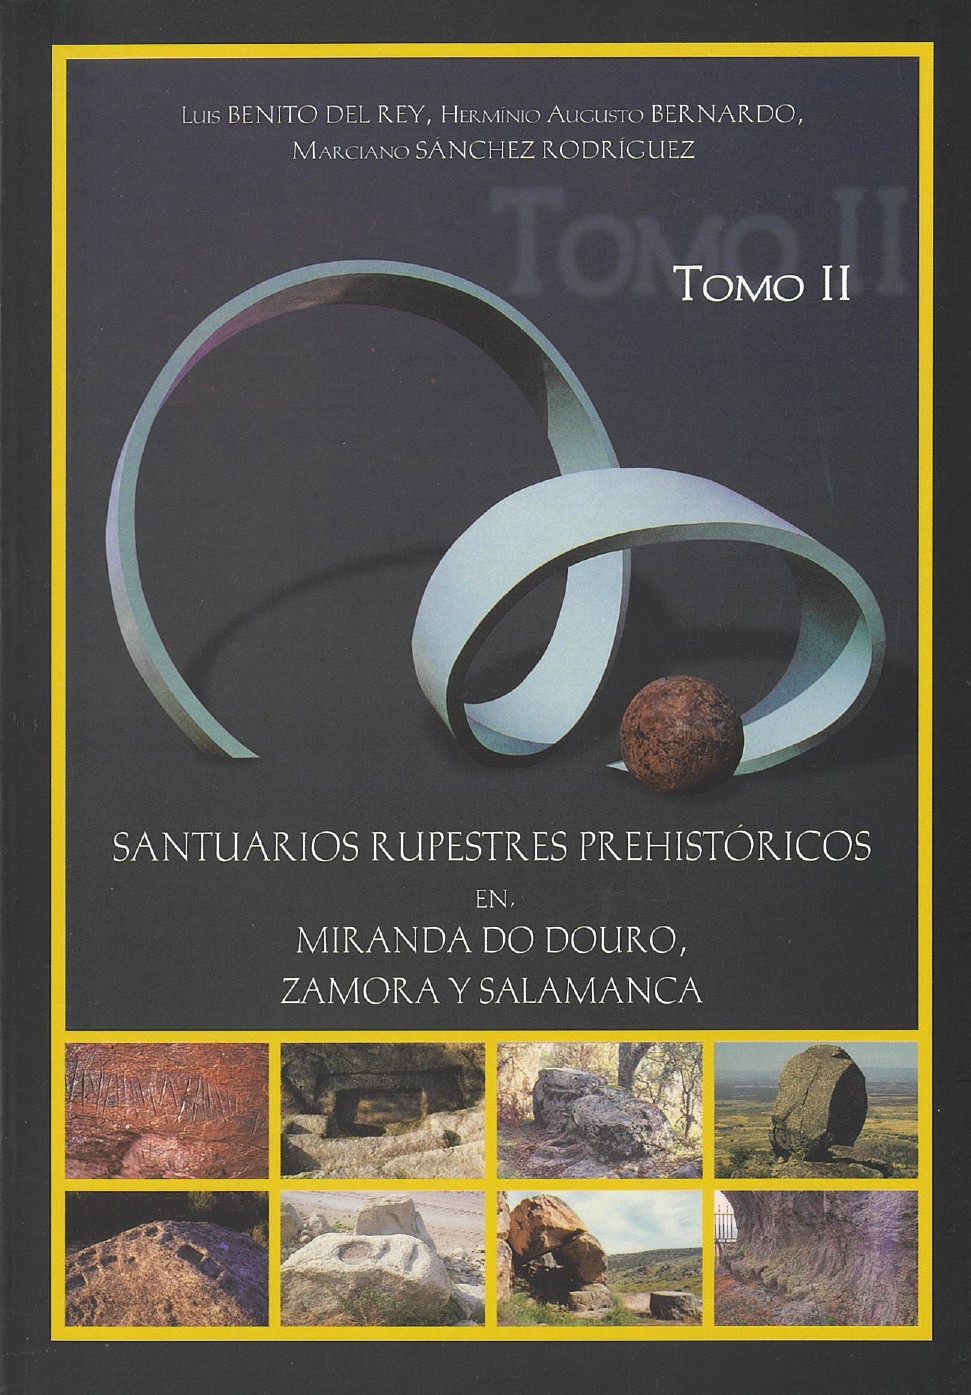 Santuarios rupestres prehistoricos ii   espanhol page 0001 1 980 2500